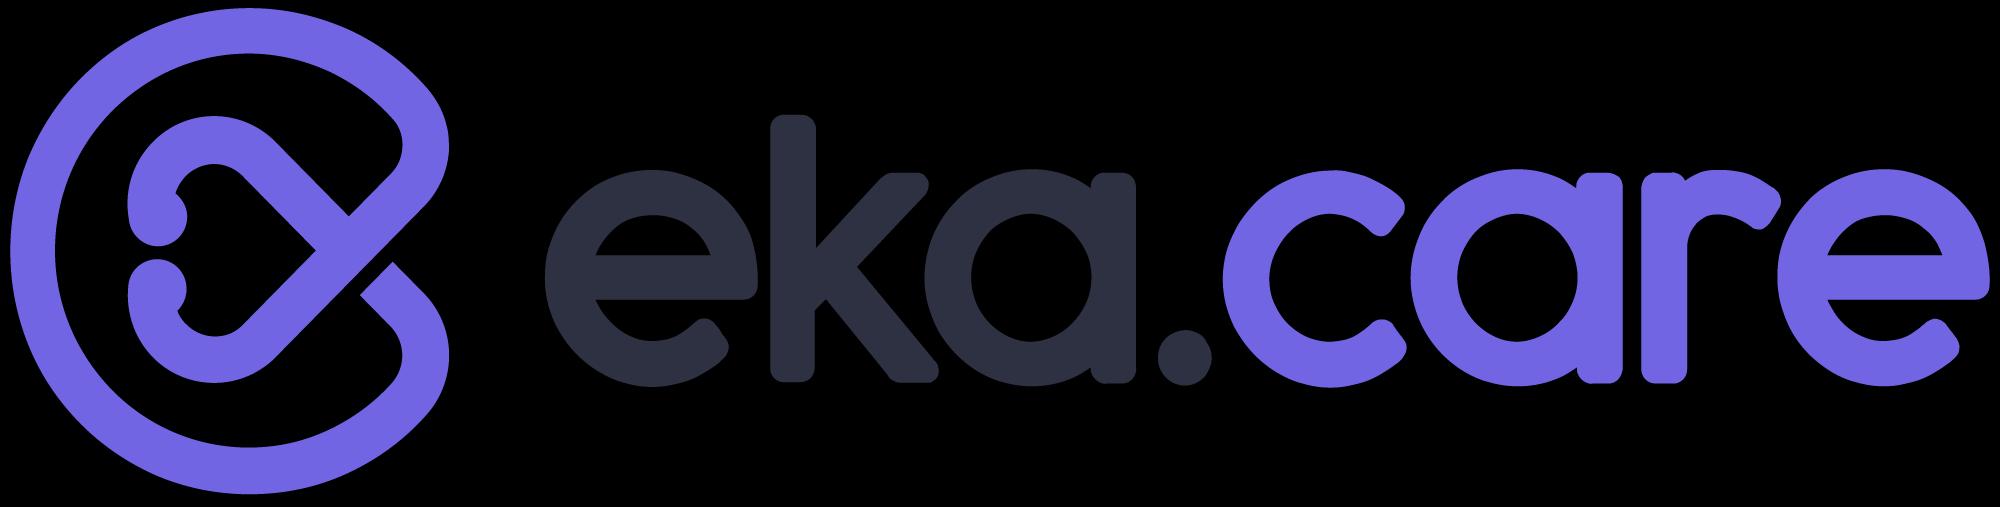 eka.care_logo